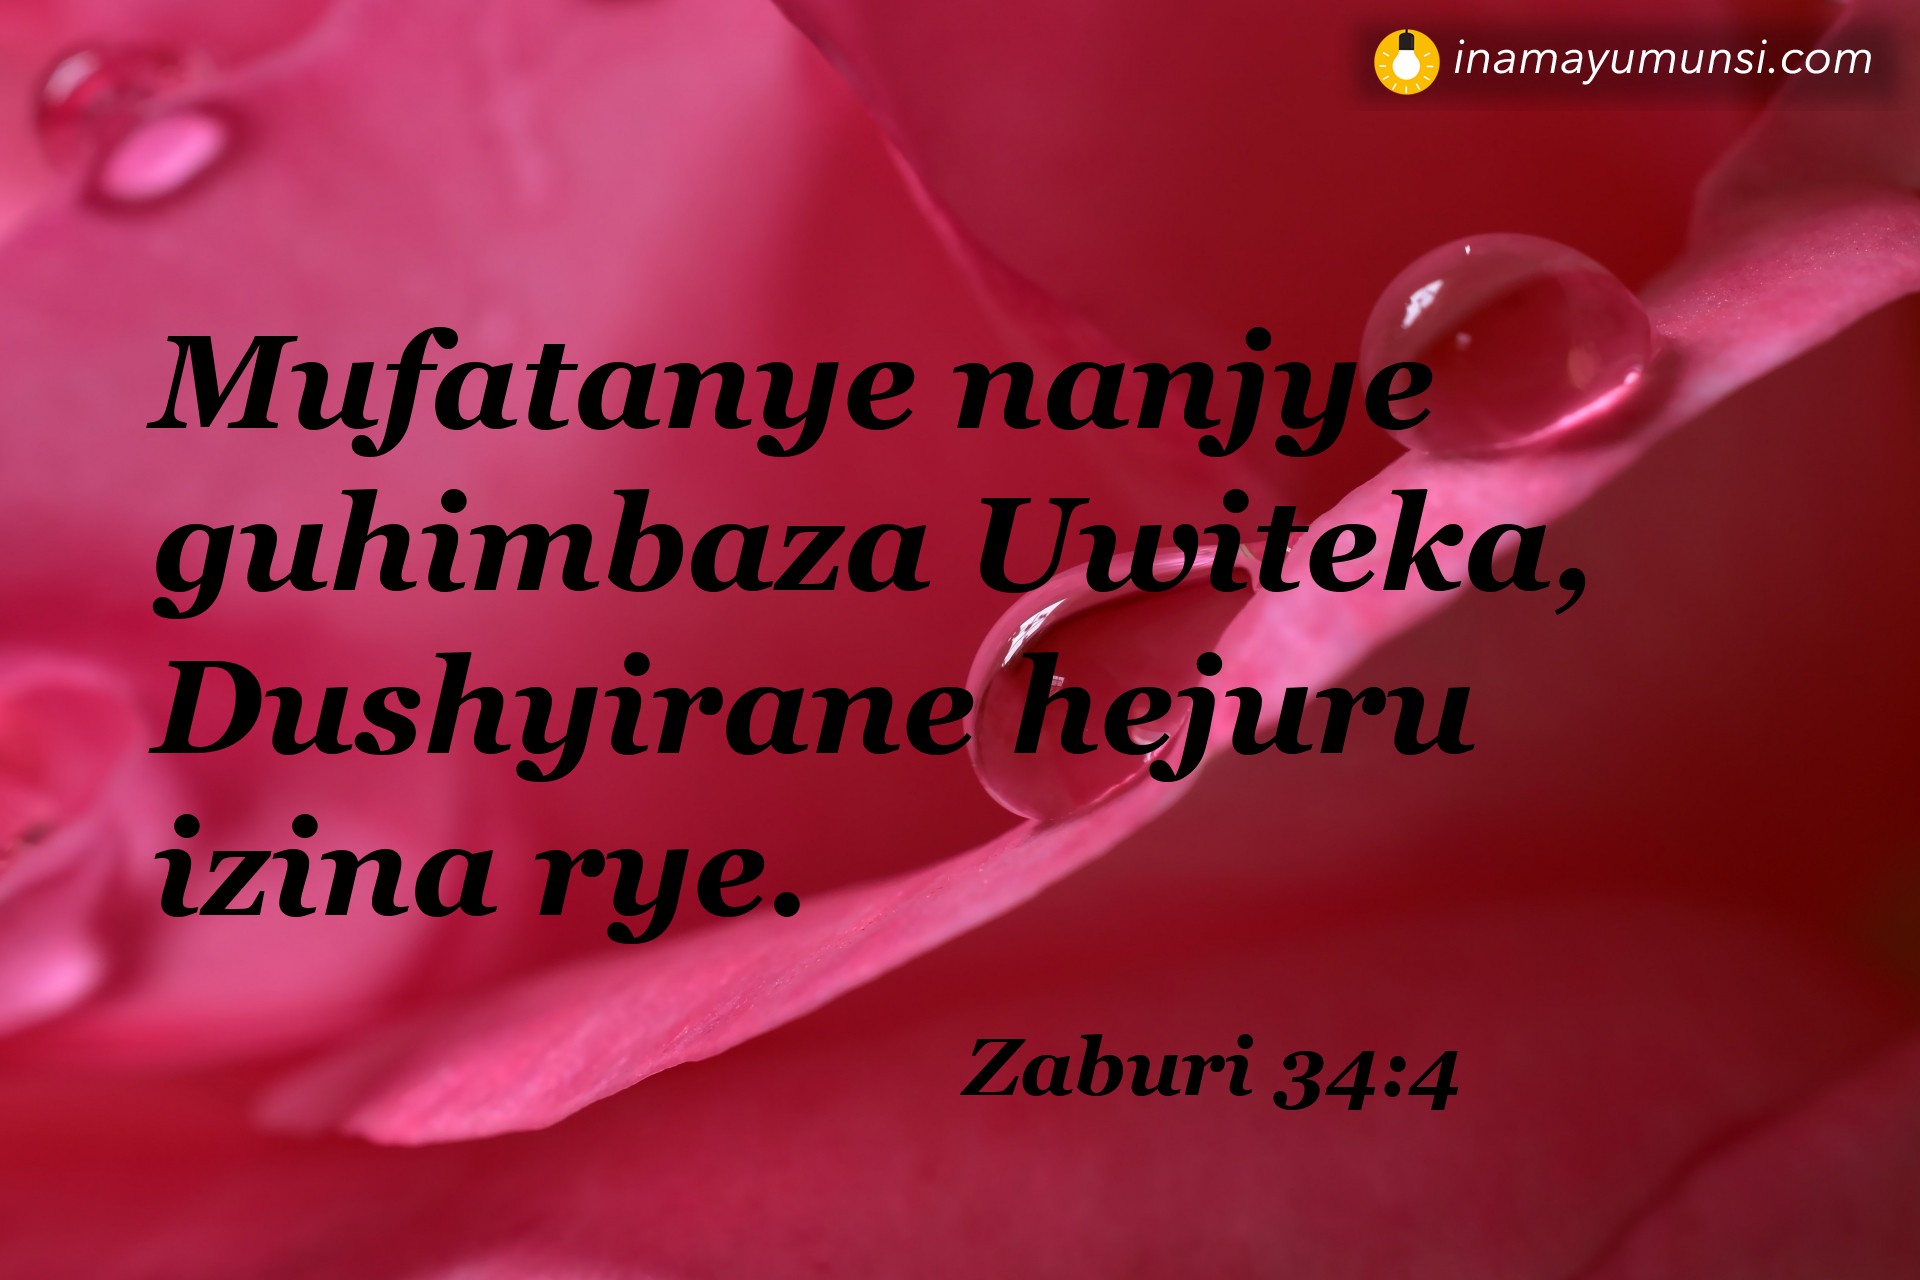 Zaburi 34:4 ⇒ Mufatanye nanjye guhimbaza Uwiteka, Dushyirane hejuru izina rye.